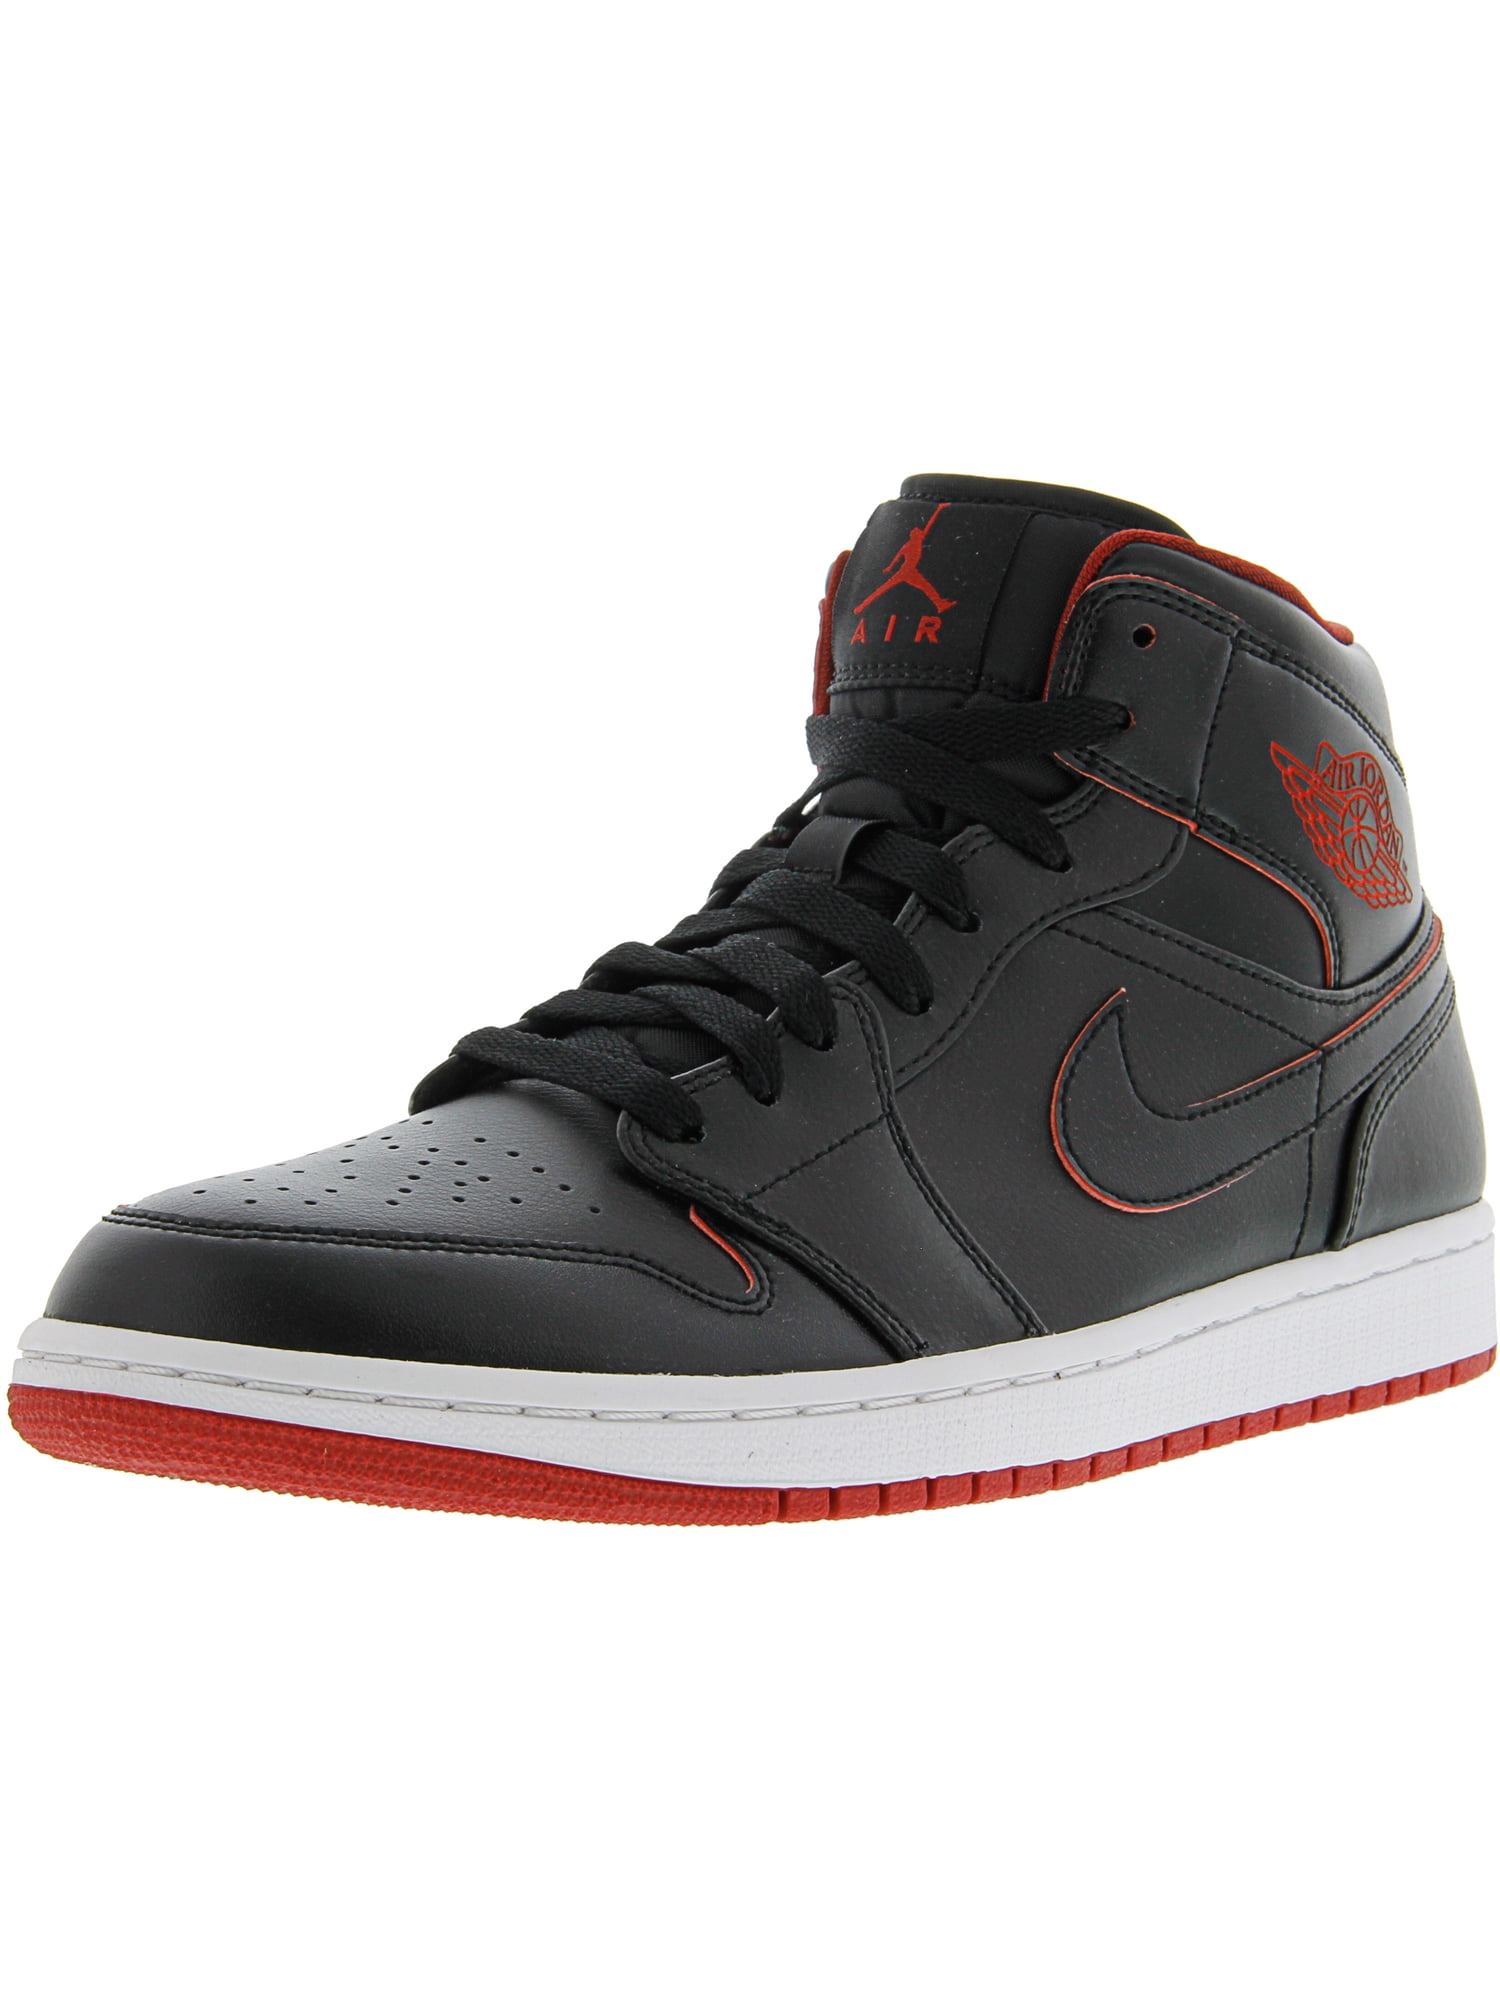 Nike Men S Air Jordan 1 Mid Black White Gym Red High Top Leather Basketball Shoe 9m